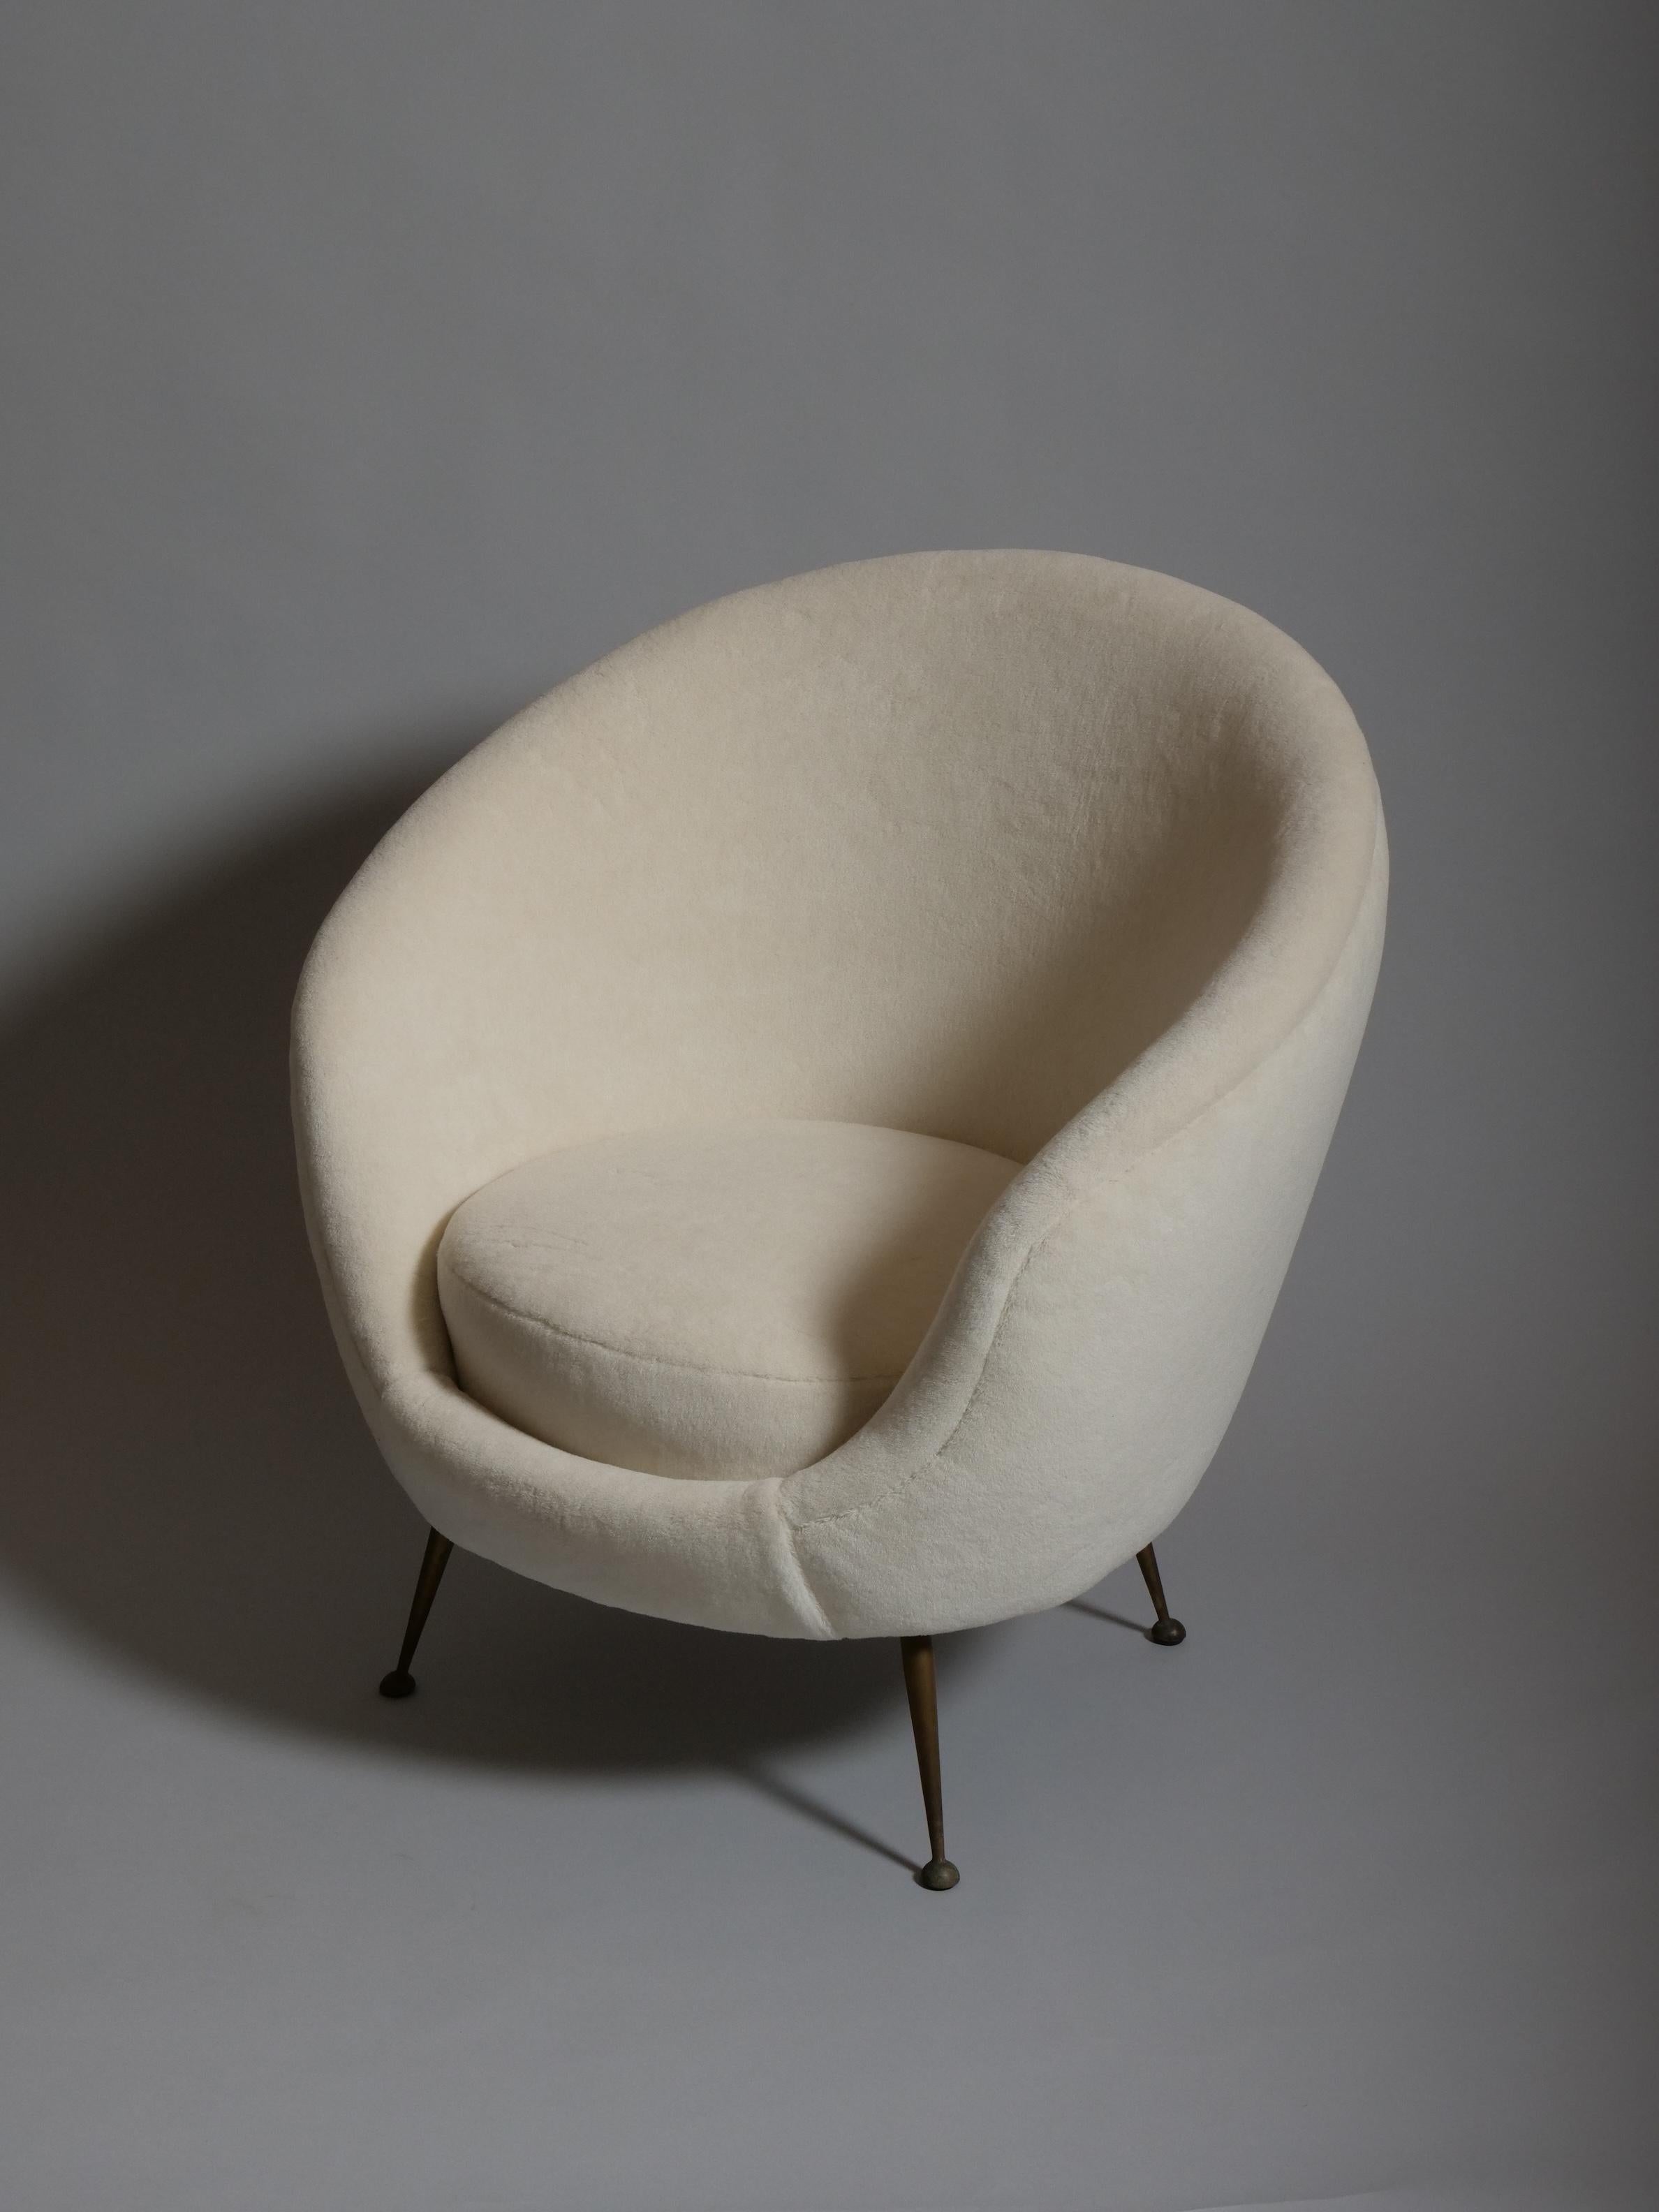 Pair Italian mid century egg shape chairs. Re upholstered in Alpaca wool velvet For Sale 4